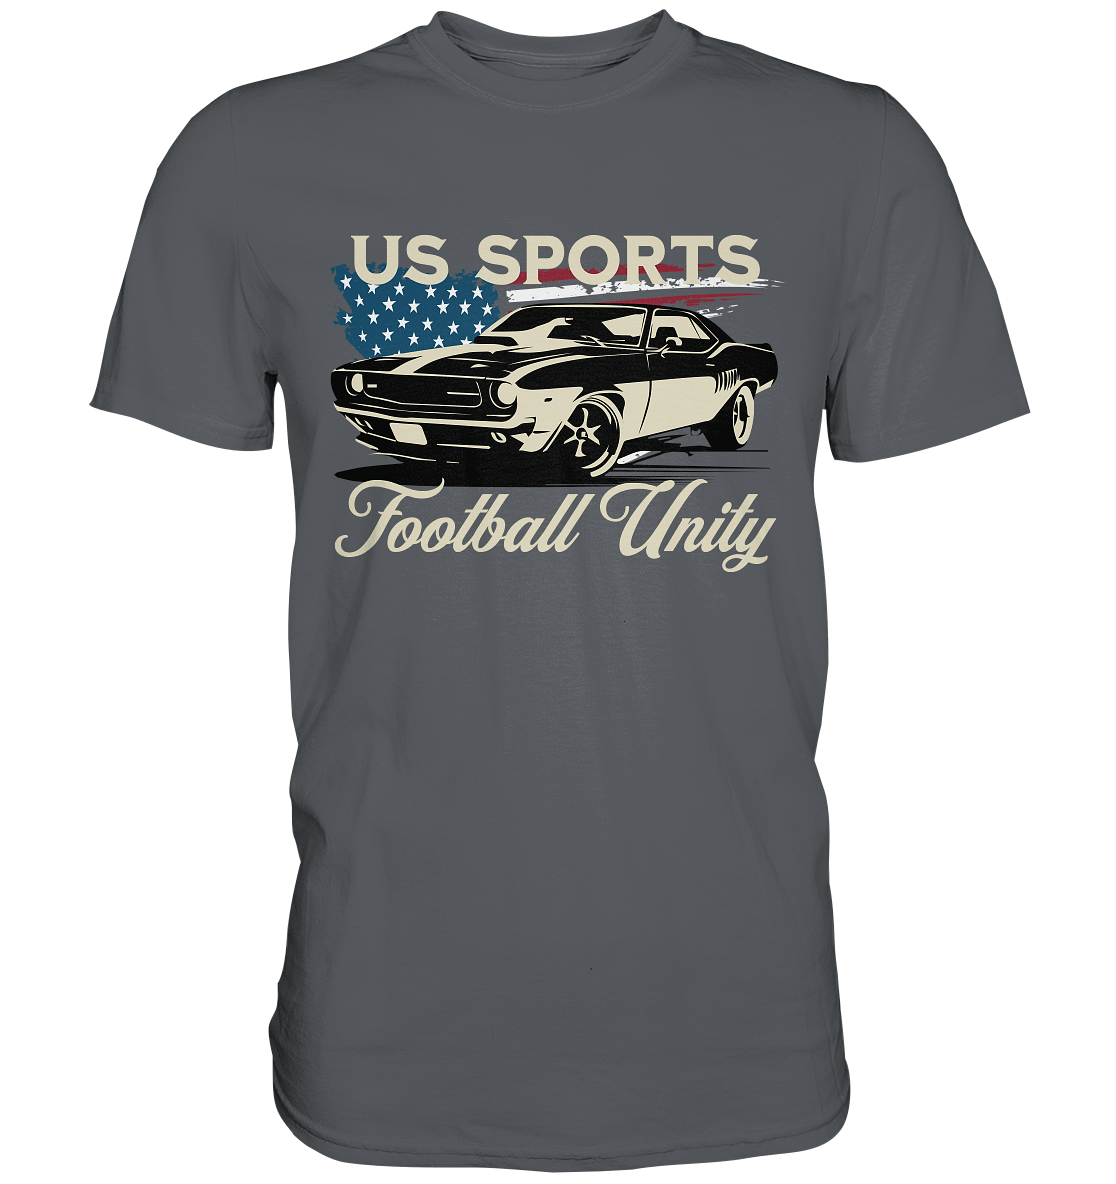 US Sports Football Unity - Premium Shirt - Football Unity Football Unity